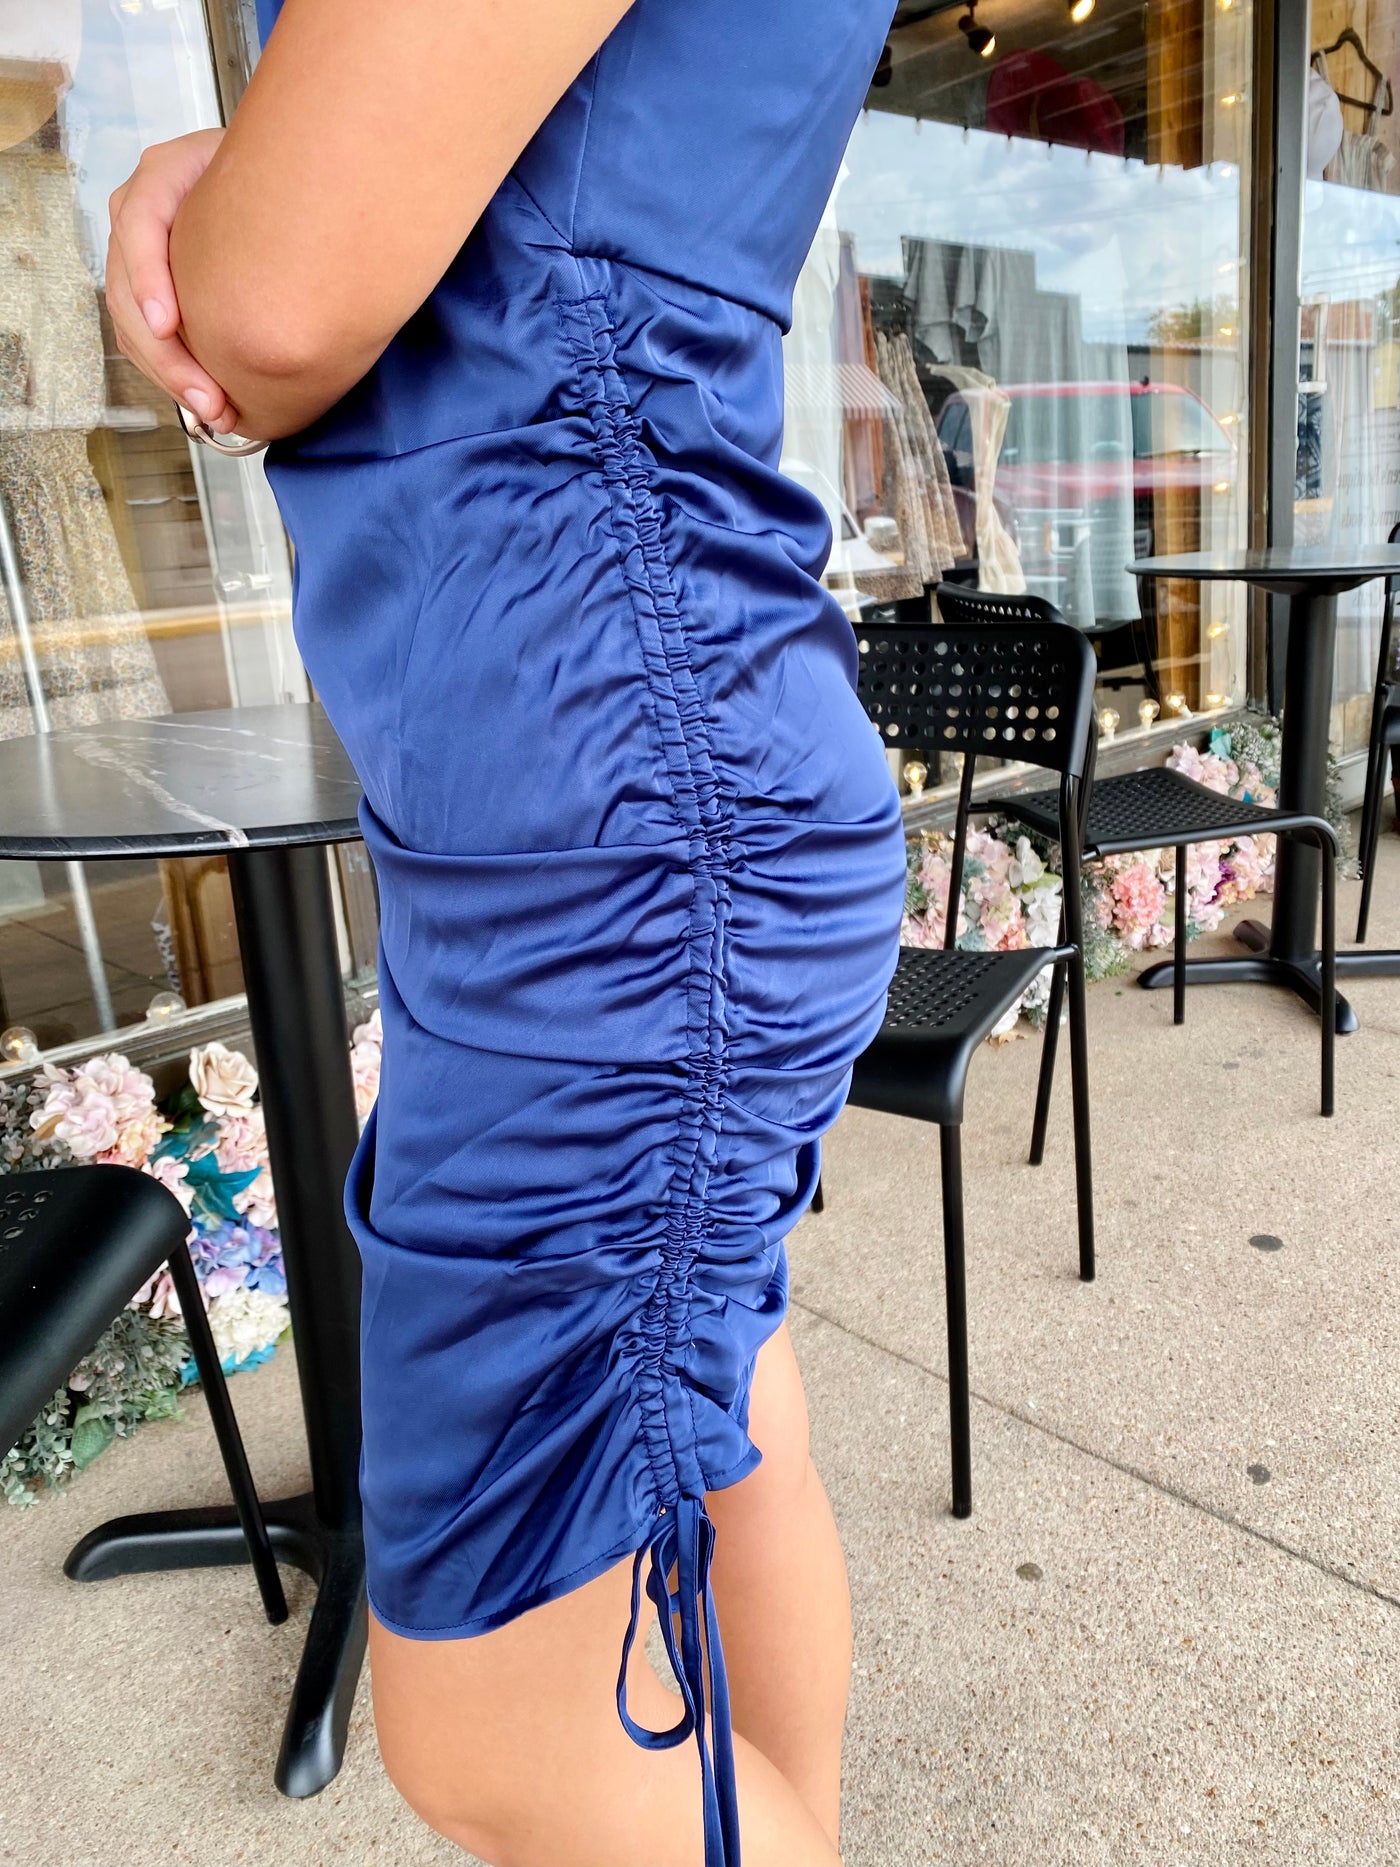 Rachel Satin Ruched Dress COLLETTA-Dresses-Anatomy Clothing Boutique in Brenham, Texas